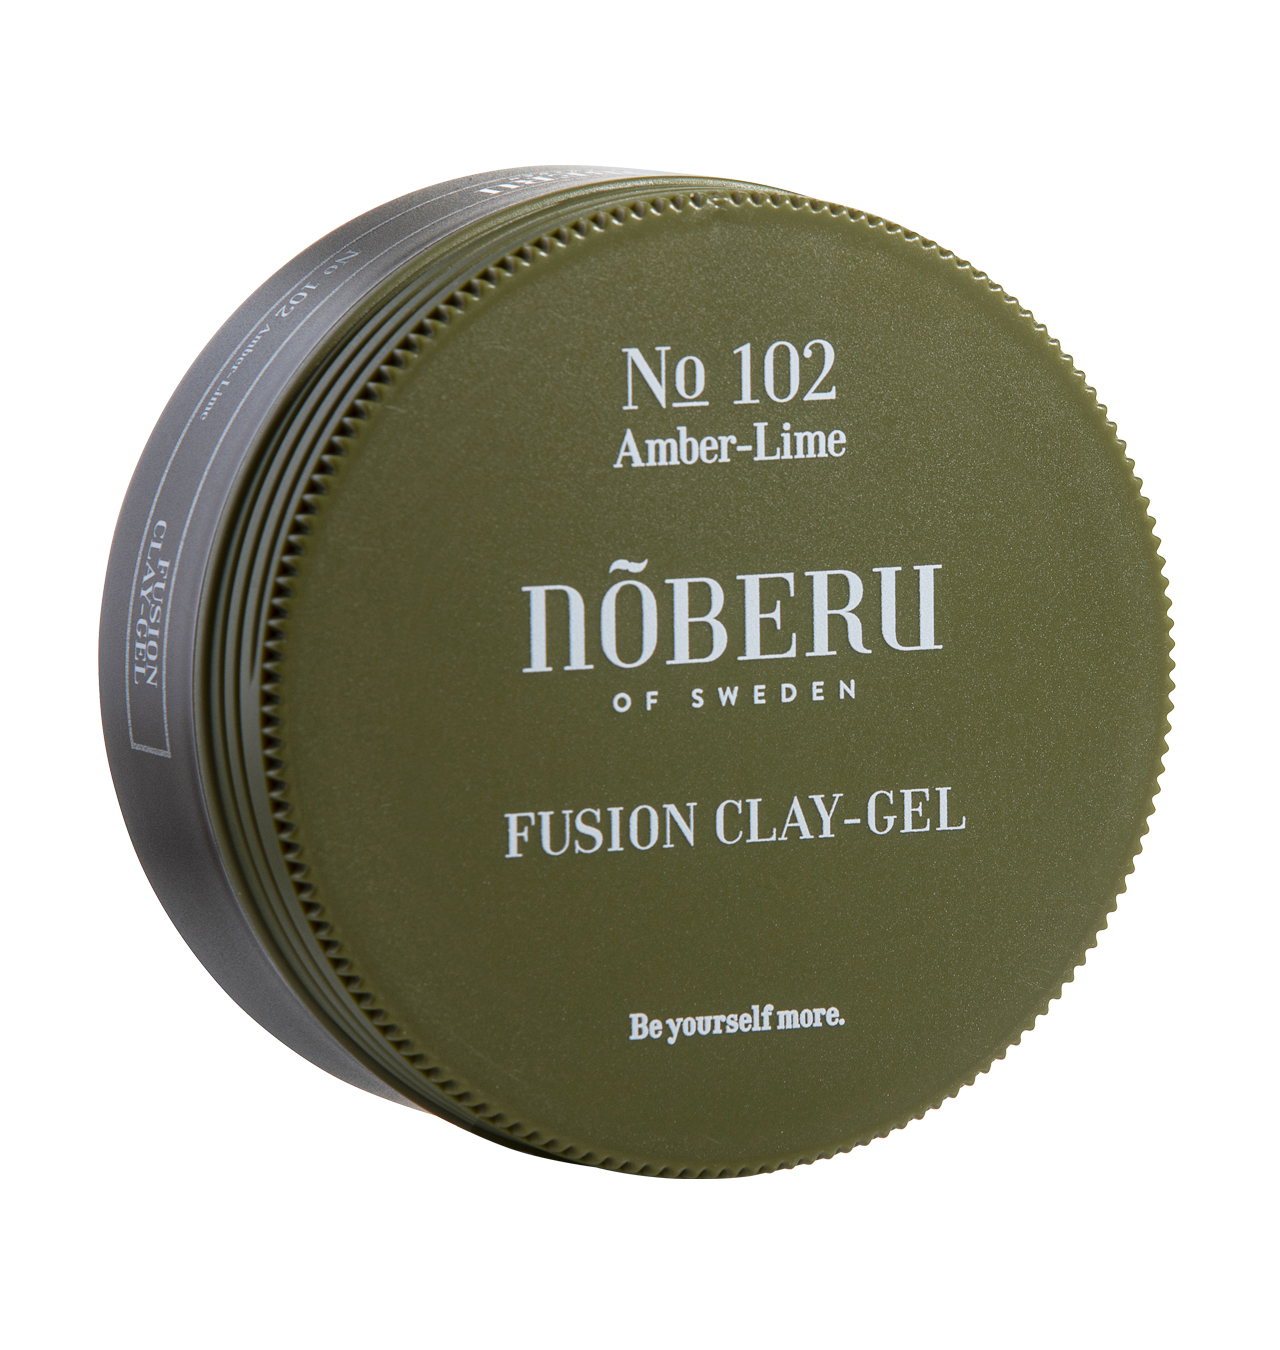 Nõberu - Fusion Clay Gel Amber Lime - 80 ml